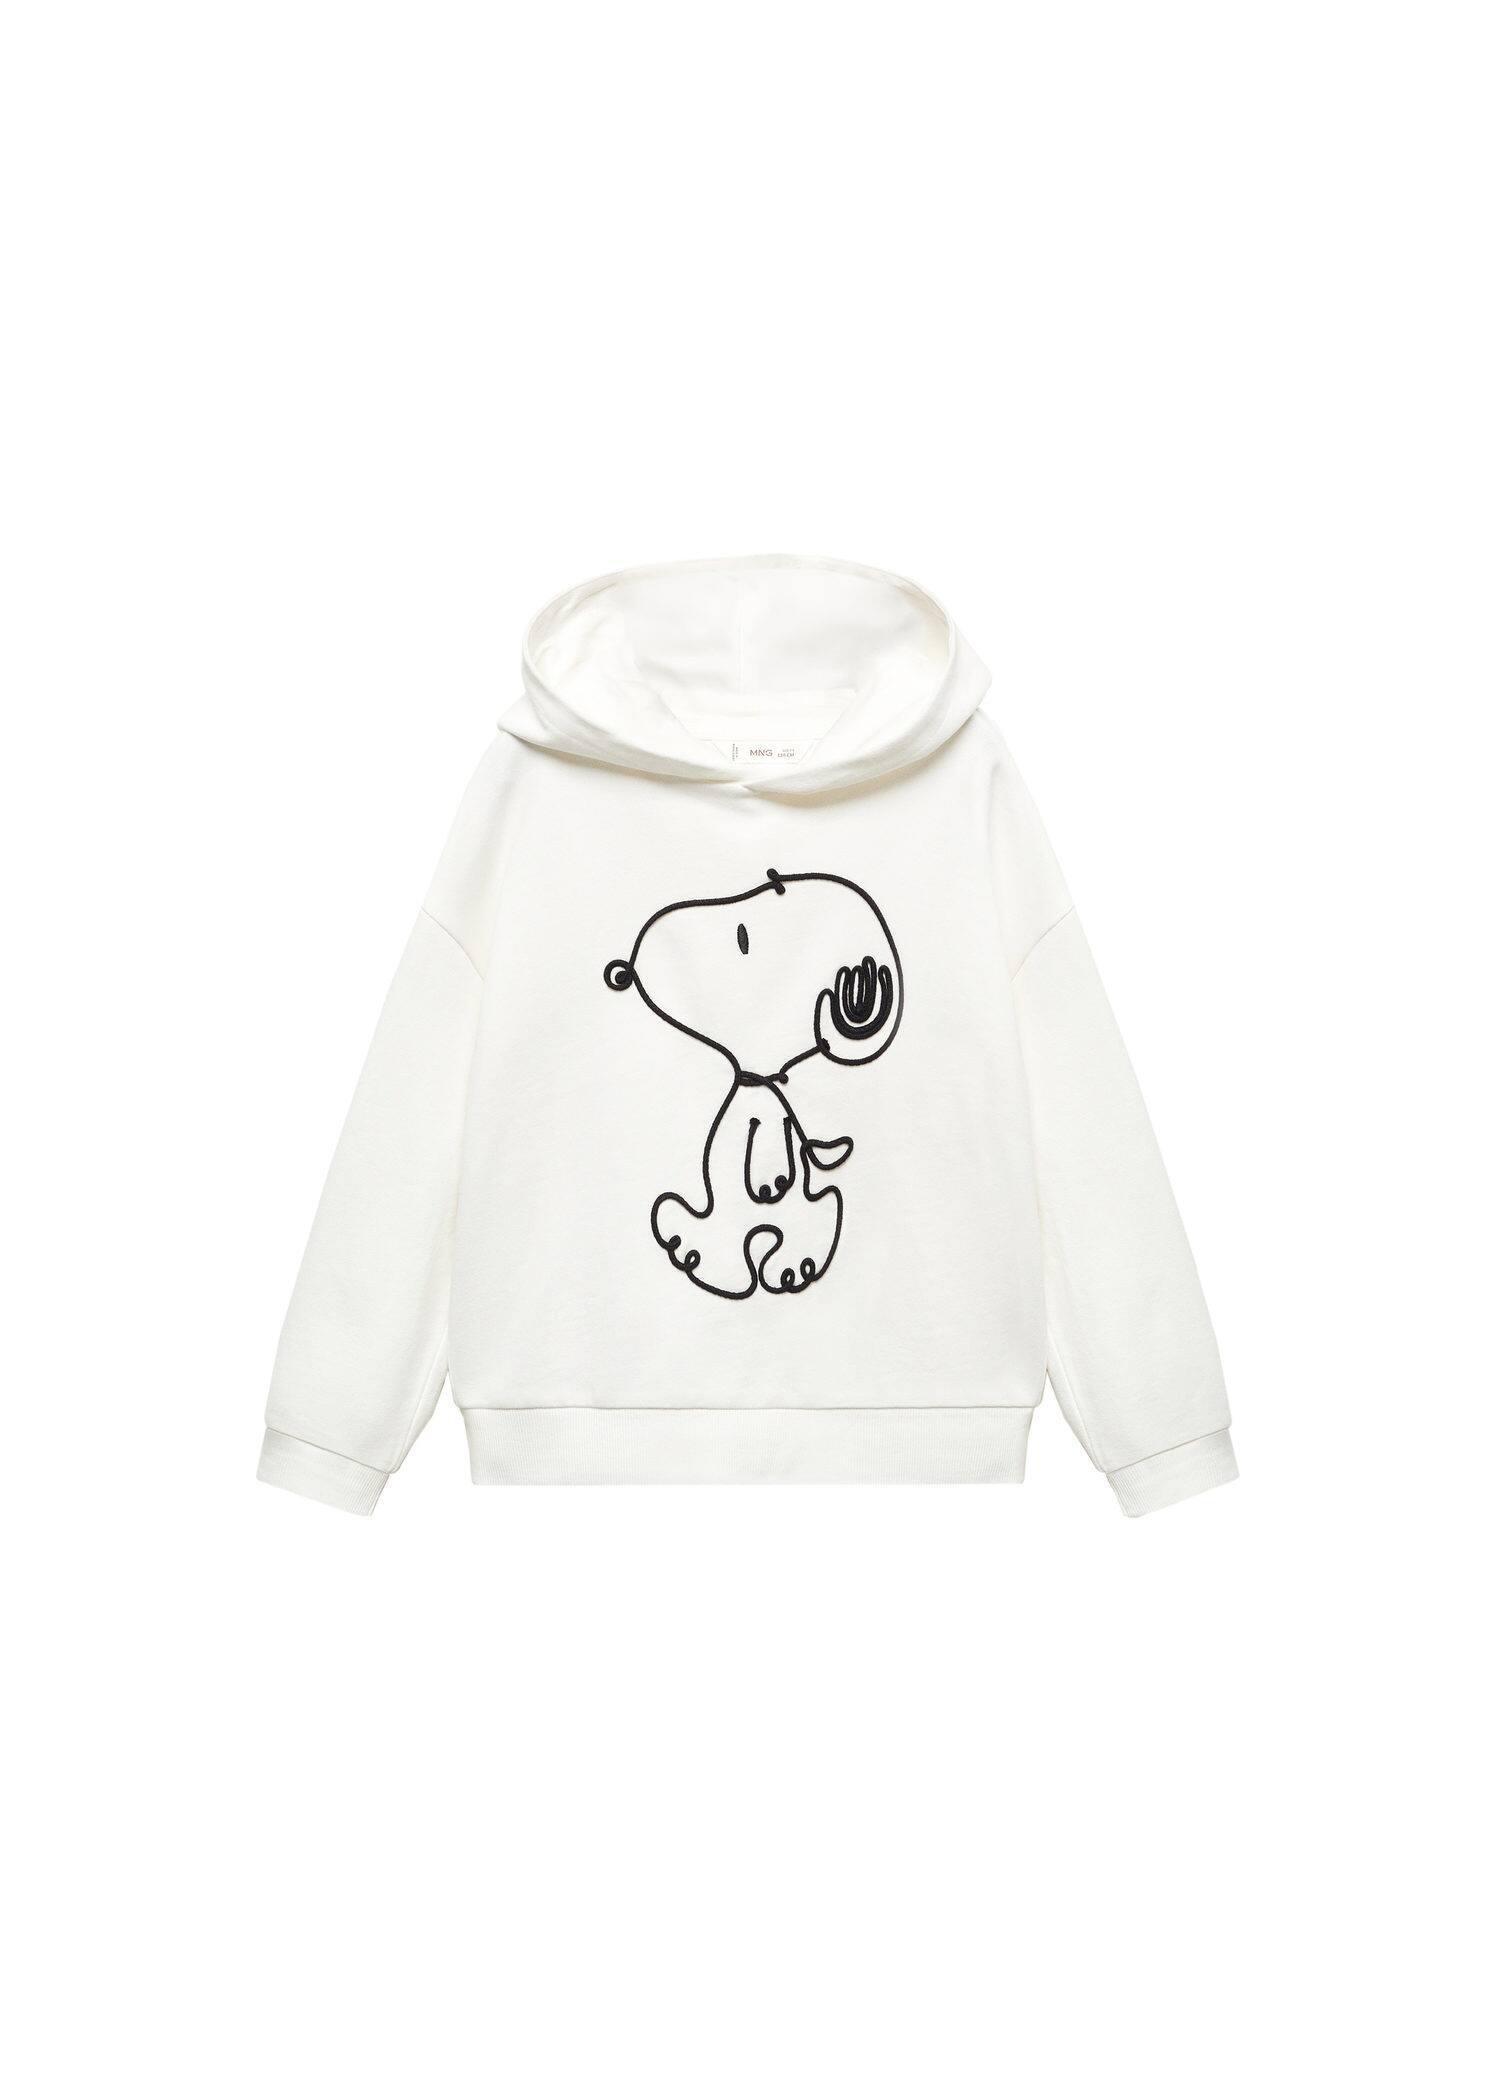 Mango - Cream Hooded Snoopy Sweatshirt, Kids Girls